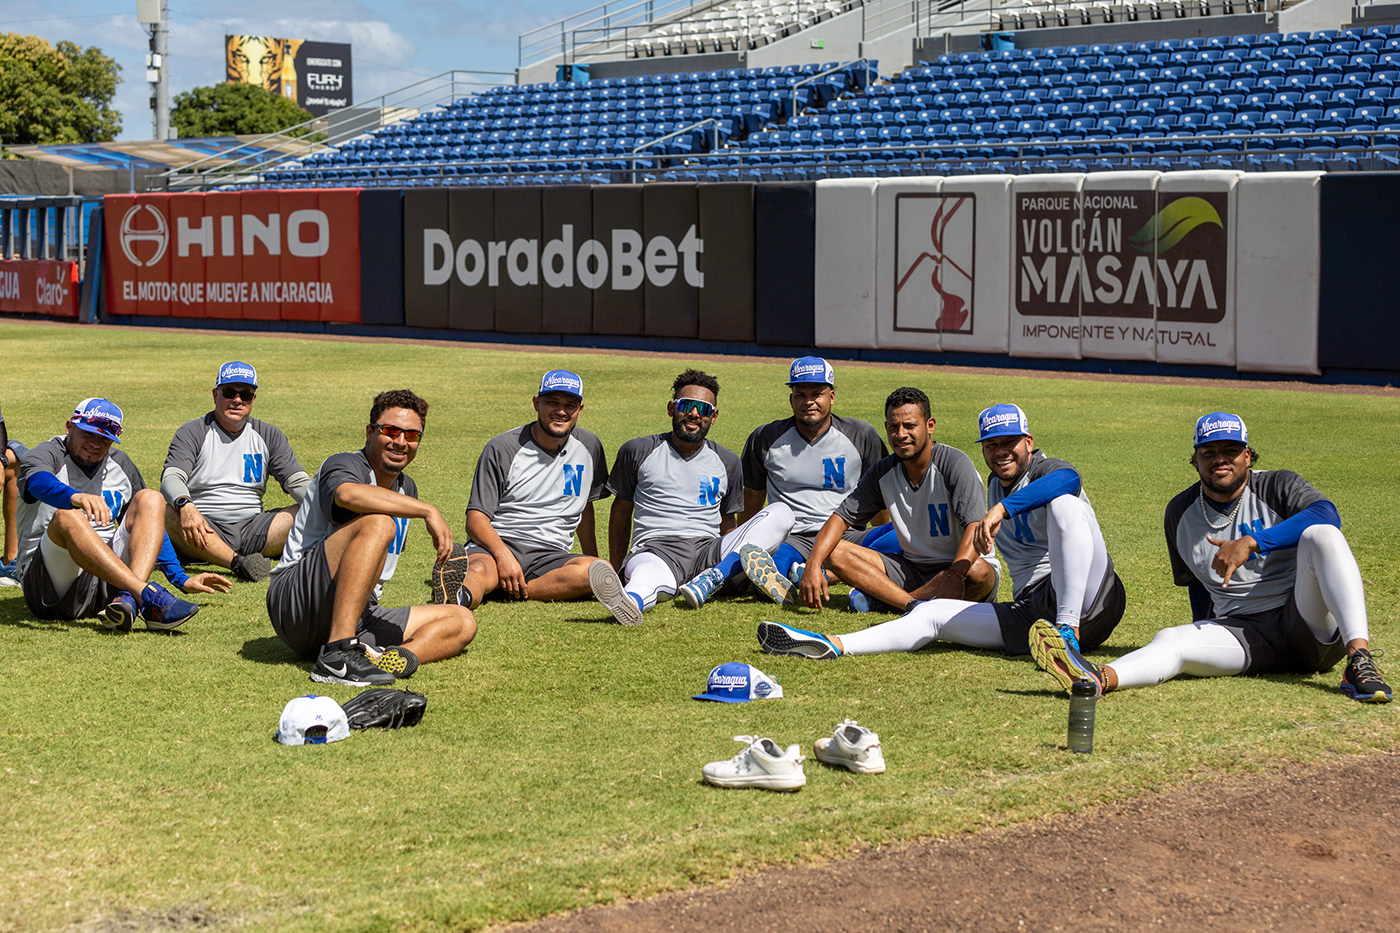 nicaragua puerto rico dominicana beisbol baseball mlb sports serie del caribe